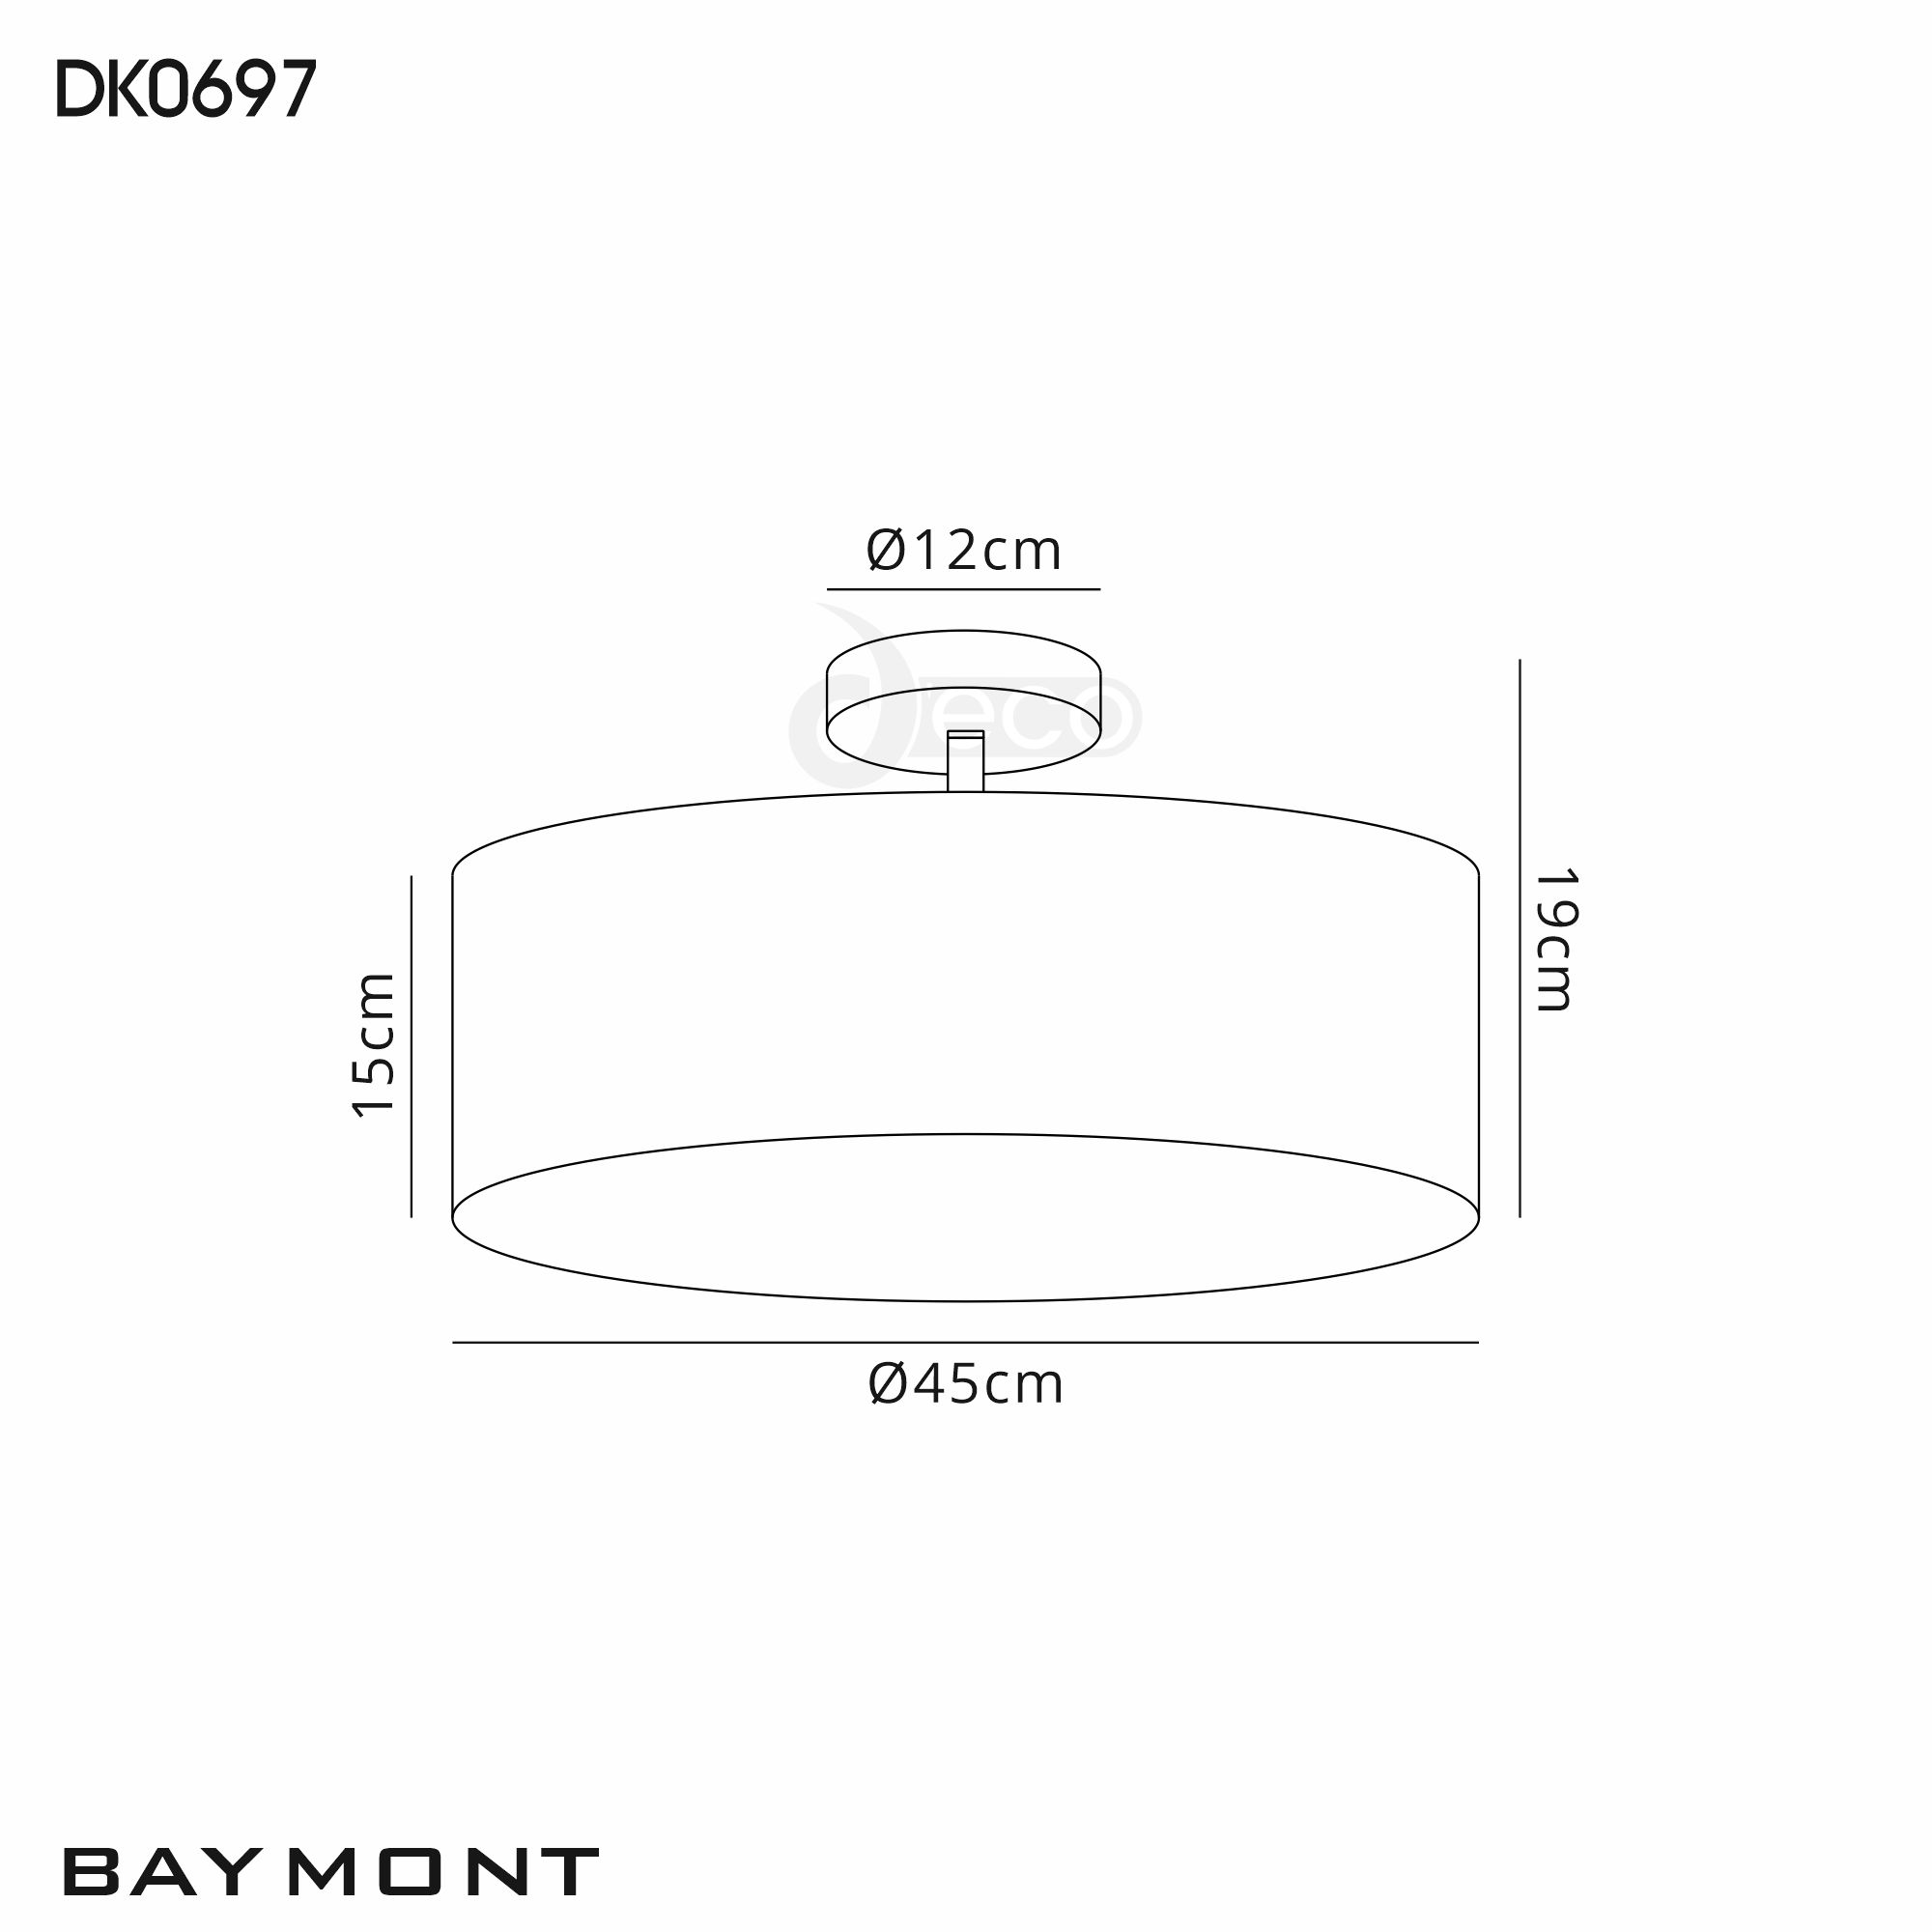 DK0697  Baymont 45cm, Semi Flush 3 Light Polished Chrome, White